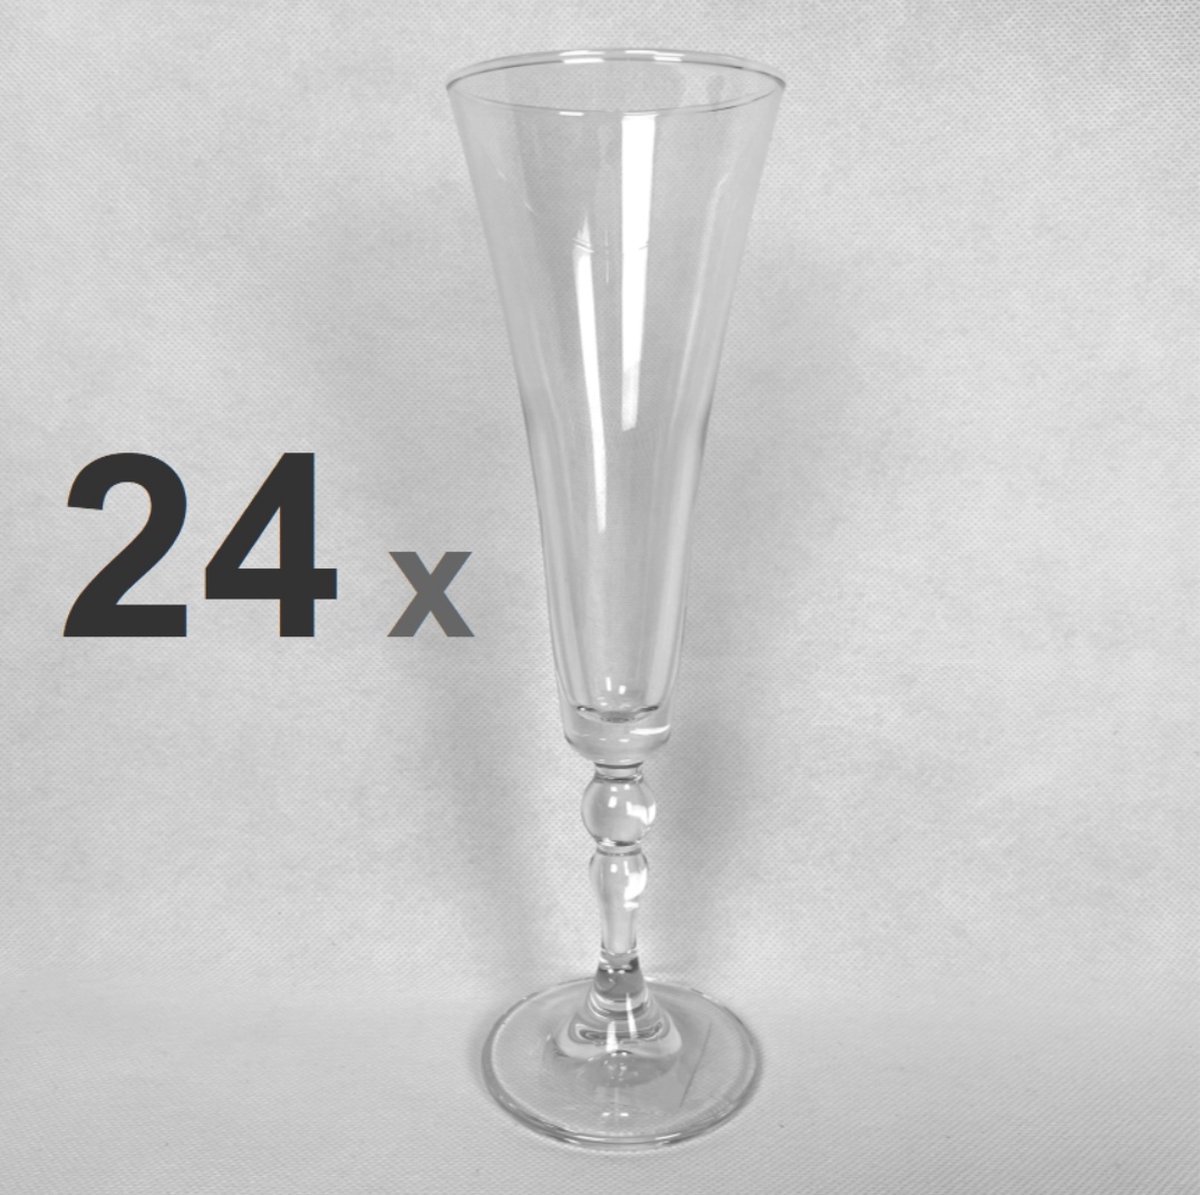 24x Champagneglazen/flutes 220 ml - 22 cl - Champagne glazen - Champagne drinken - Champagneglazen van glas - transparant